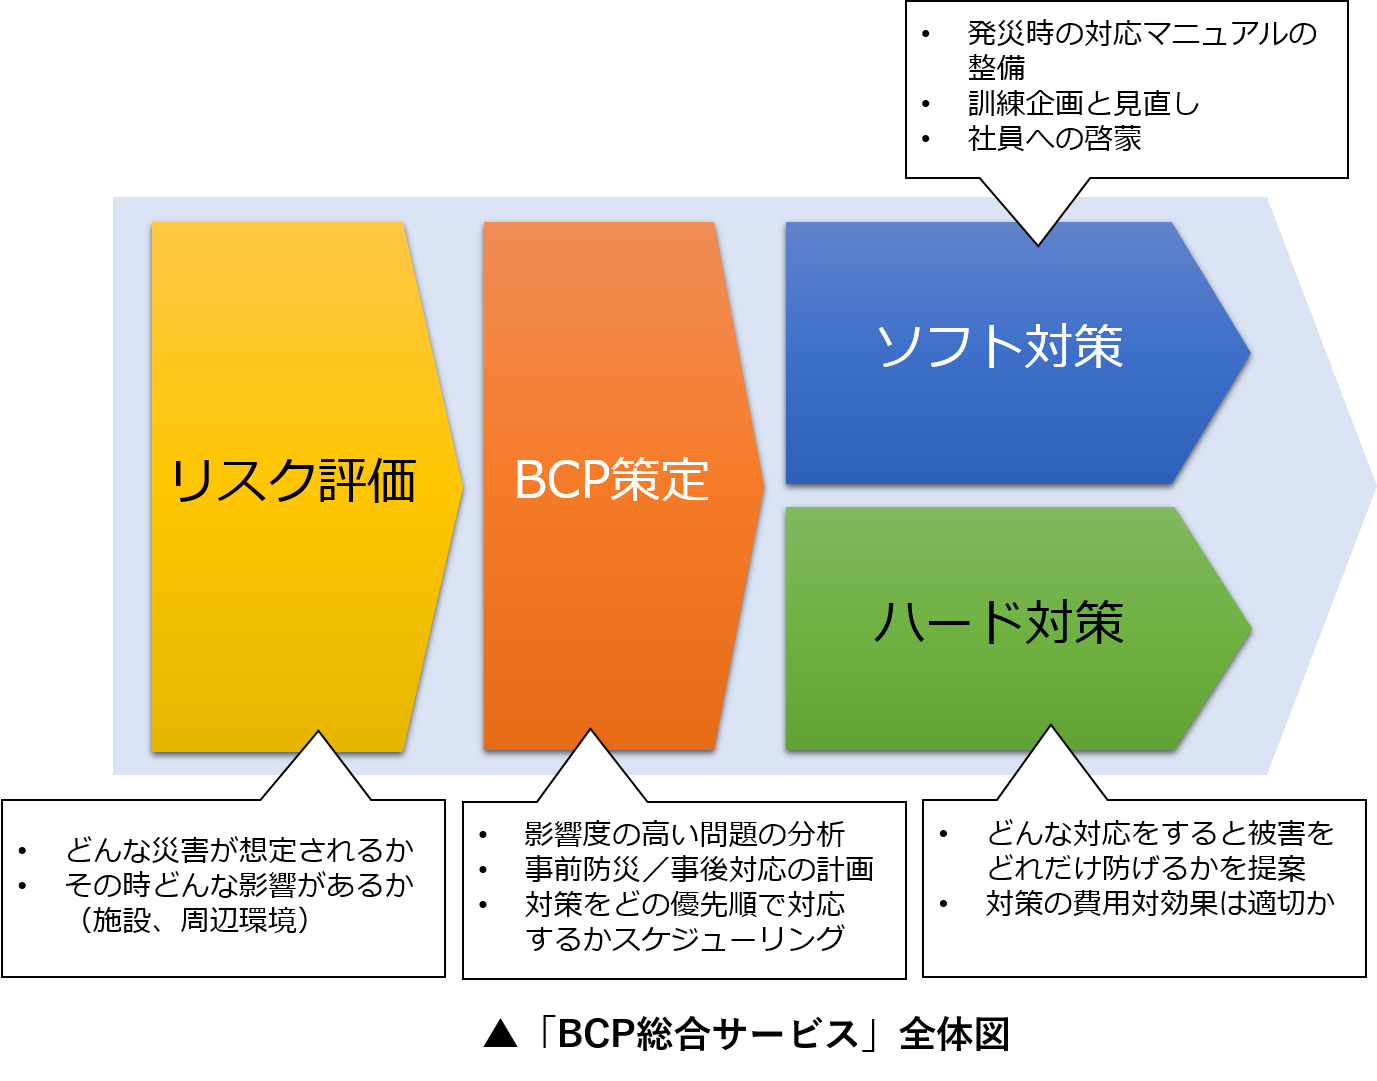 「BCP総合サービス」全体図